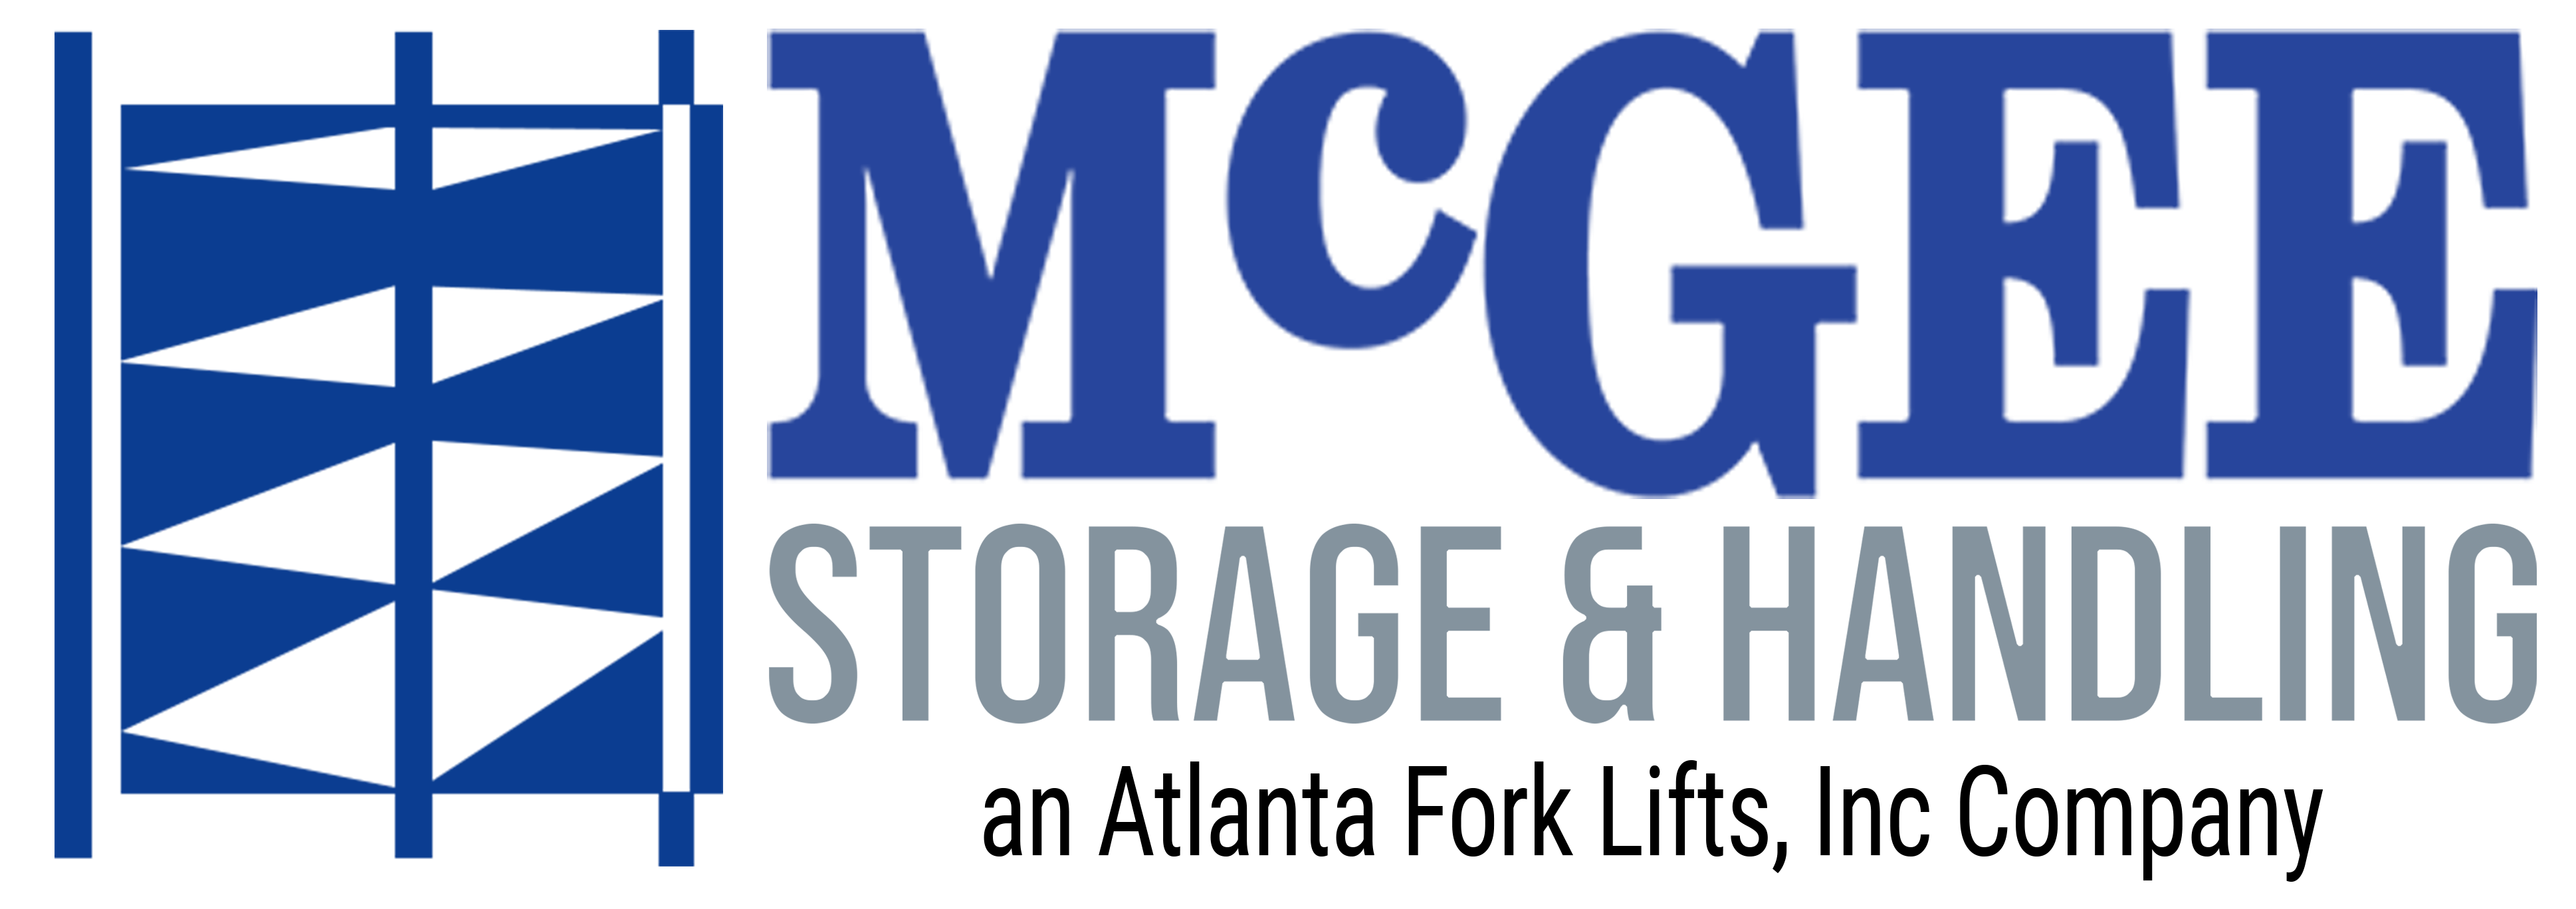 McGee Storage & Handling - An Atlanta Forklifts, Inc. Company